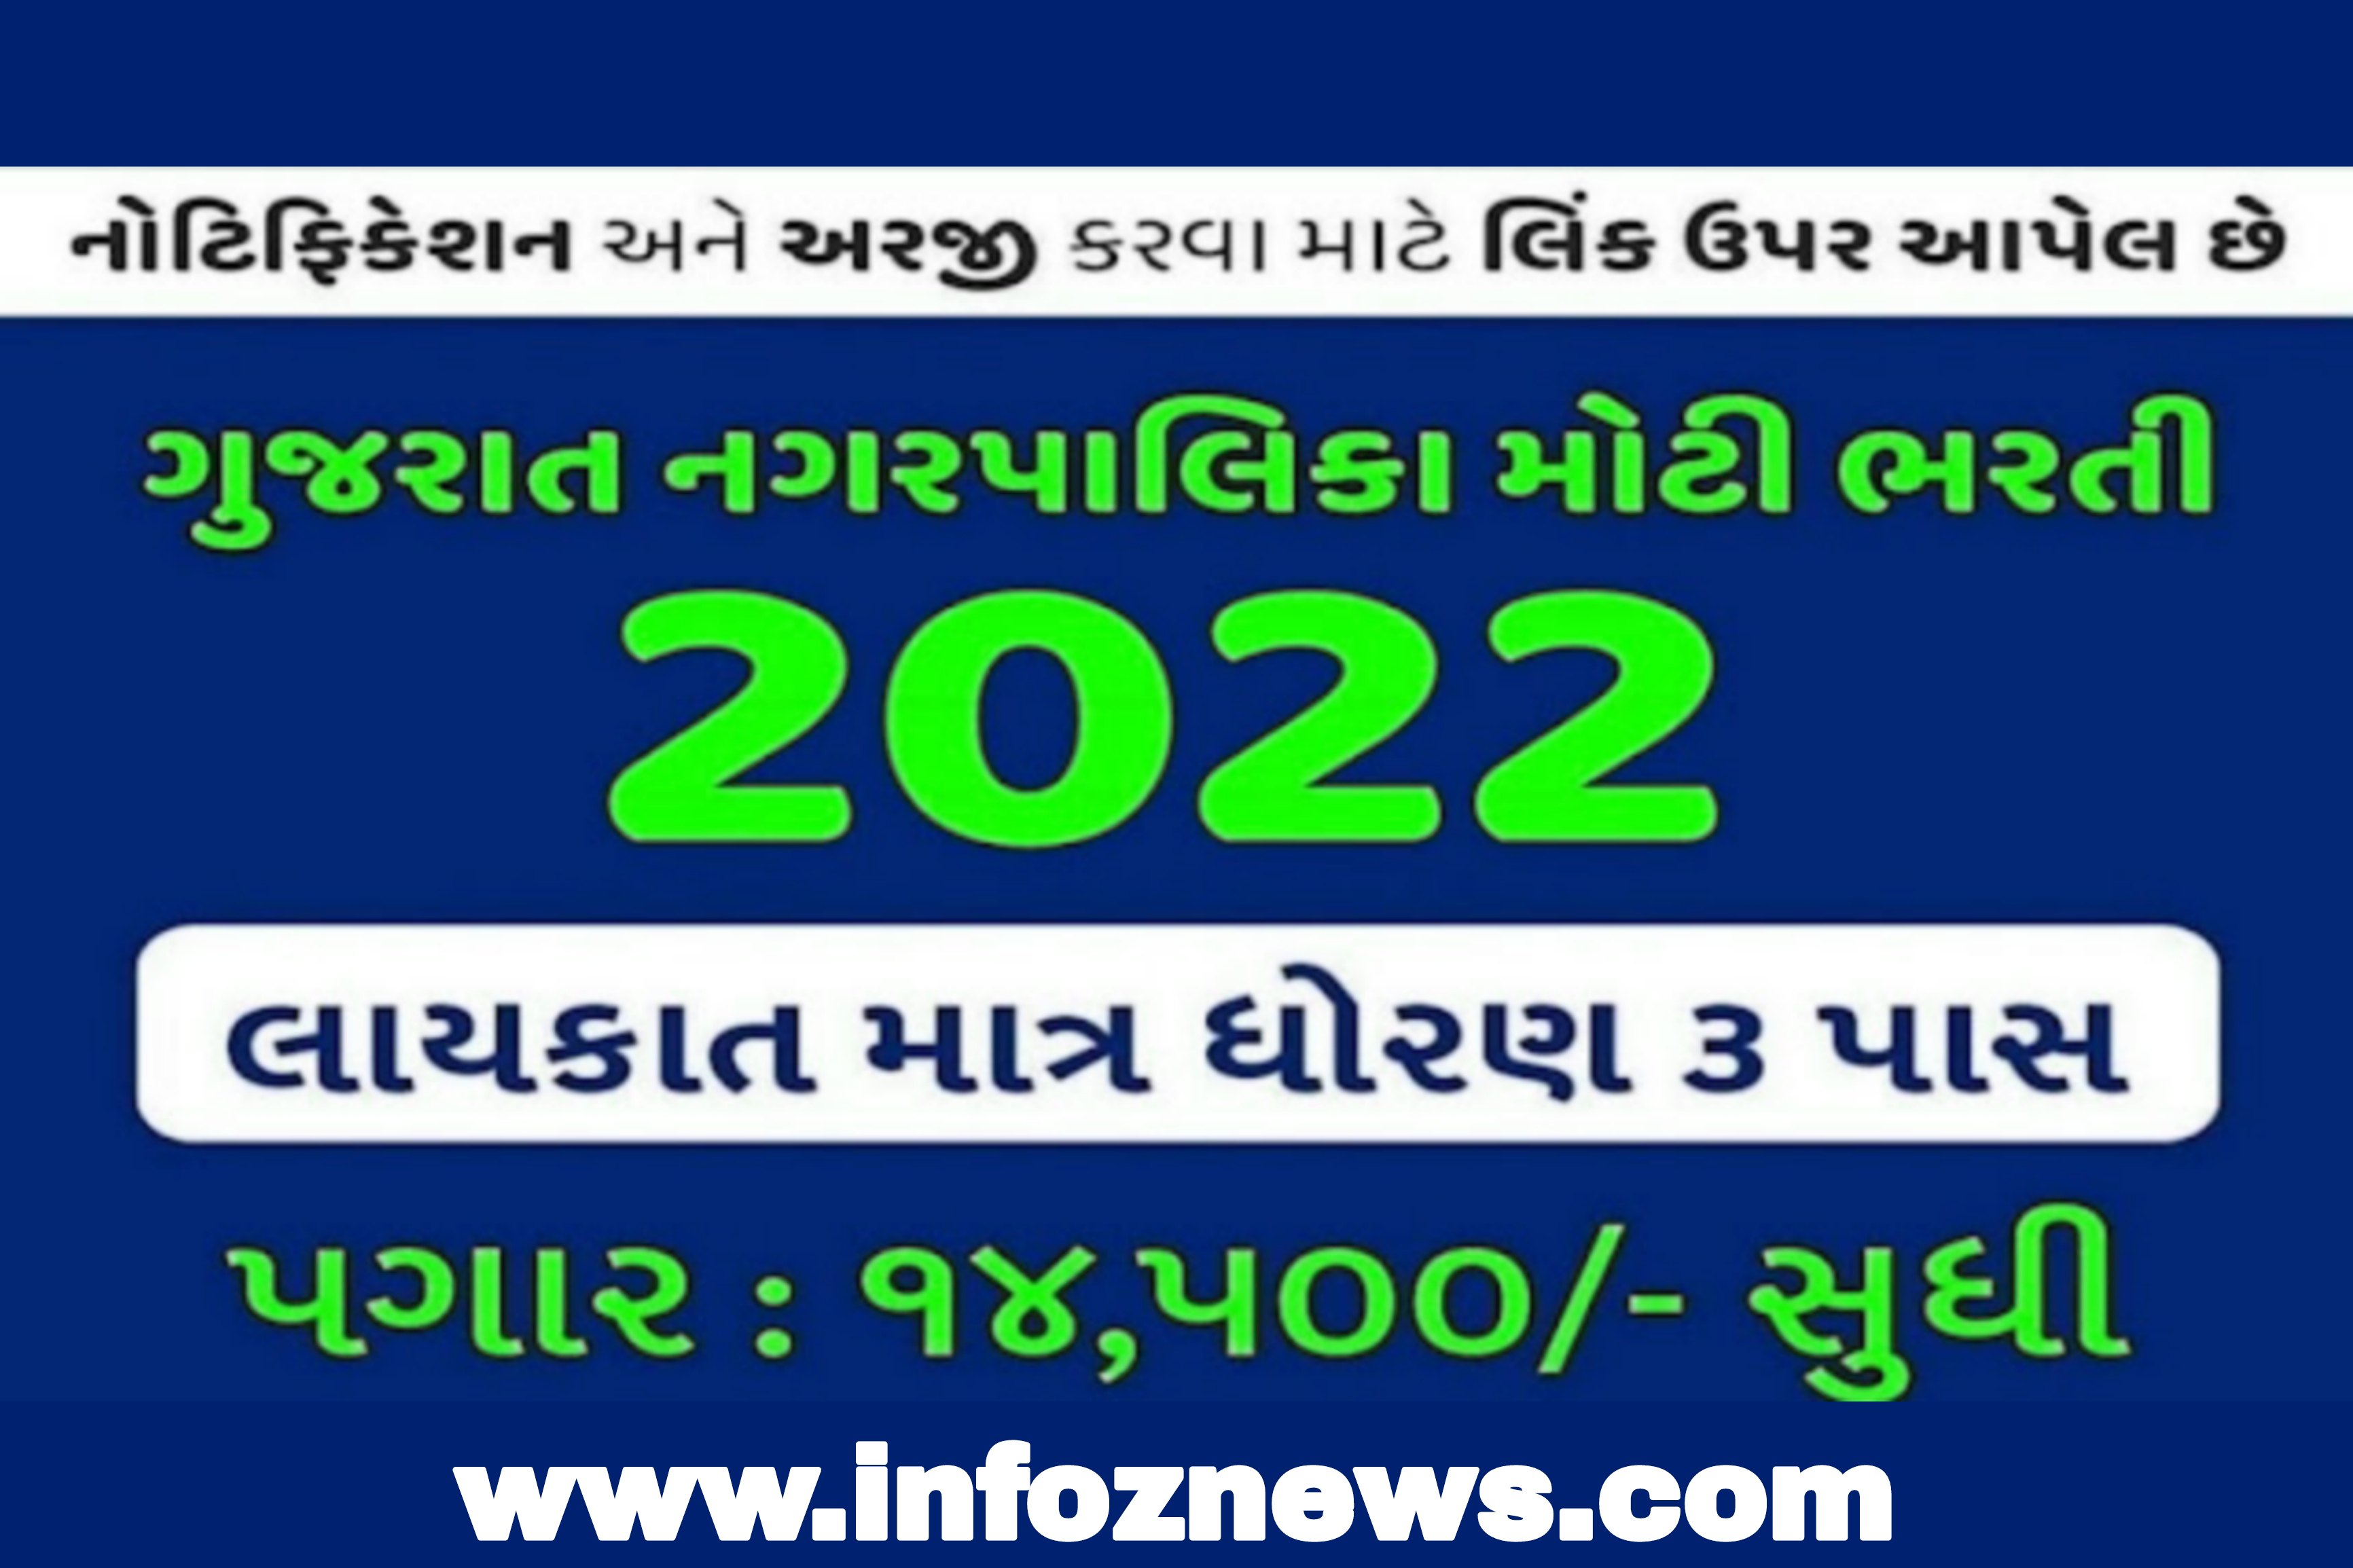 Bardoli Nagarpalika Recruitment 2022 Palanpur Nagarpalika Recruitment 2022 Modasa Nagarpalika Recruitment 2021 Vyara Nagar Palika Recruitment 2021 Nagarpalika Recruitment 2021 in Gujarat Gondal Nagarpalika Recruitment